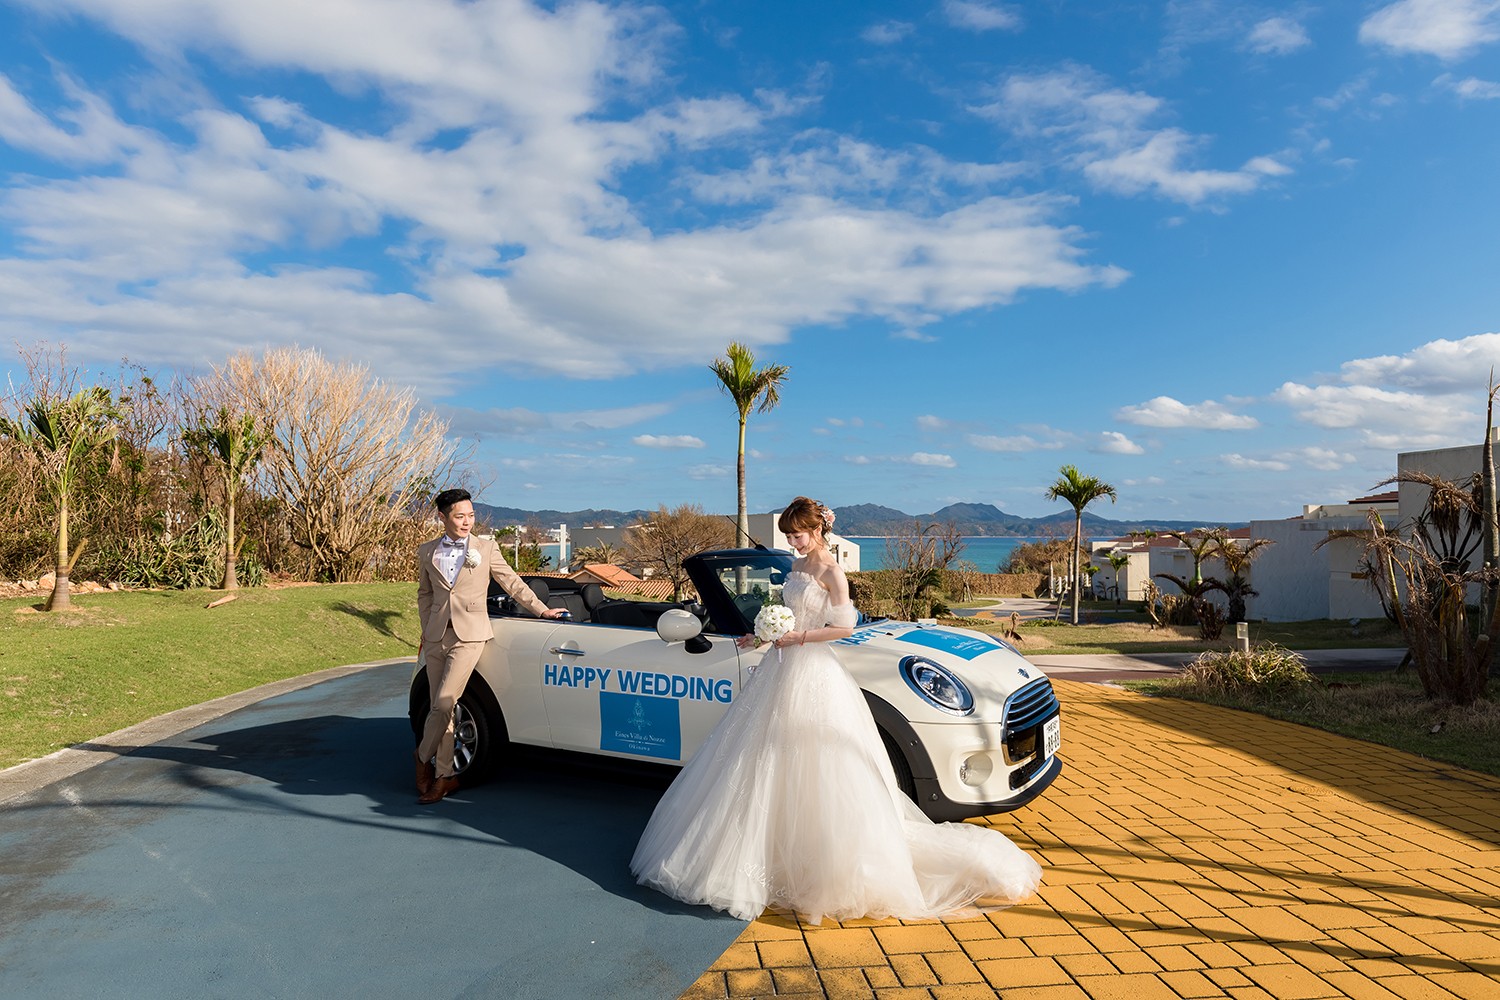 「HAPPY WEDDING」 アイネスヴィラノッツェ沖縄(名護市)